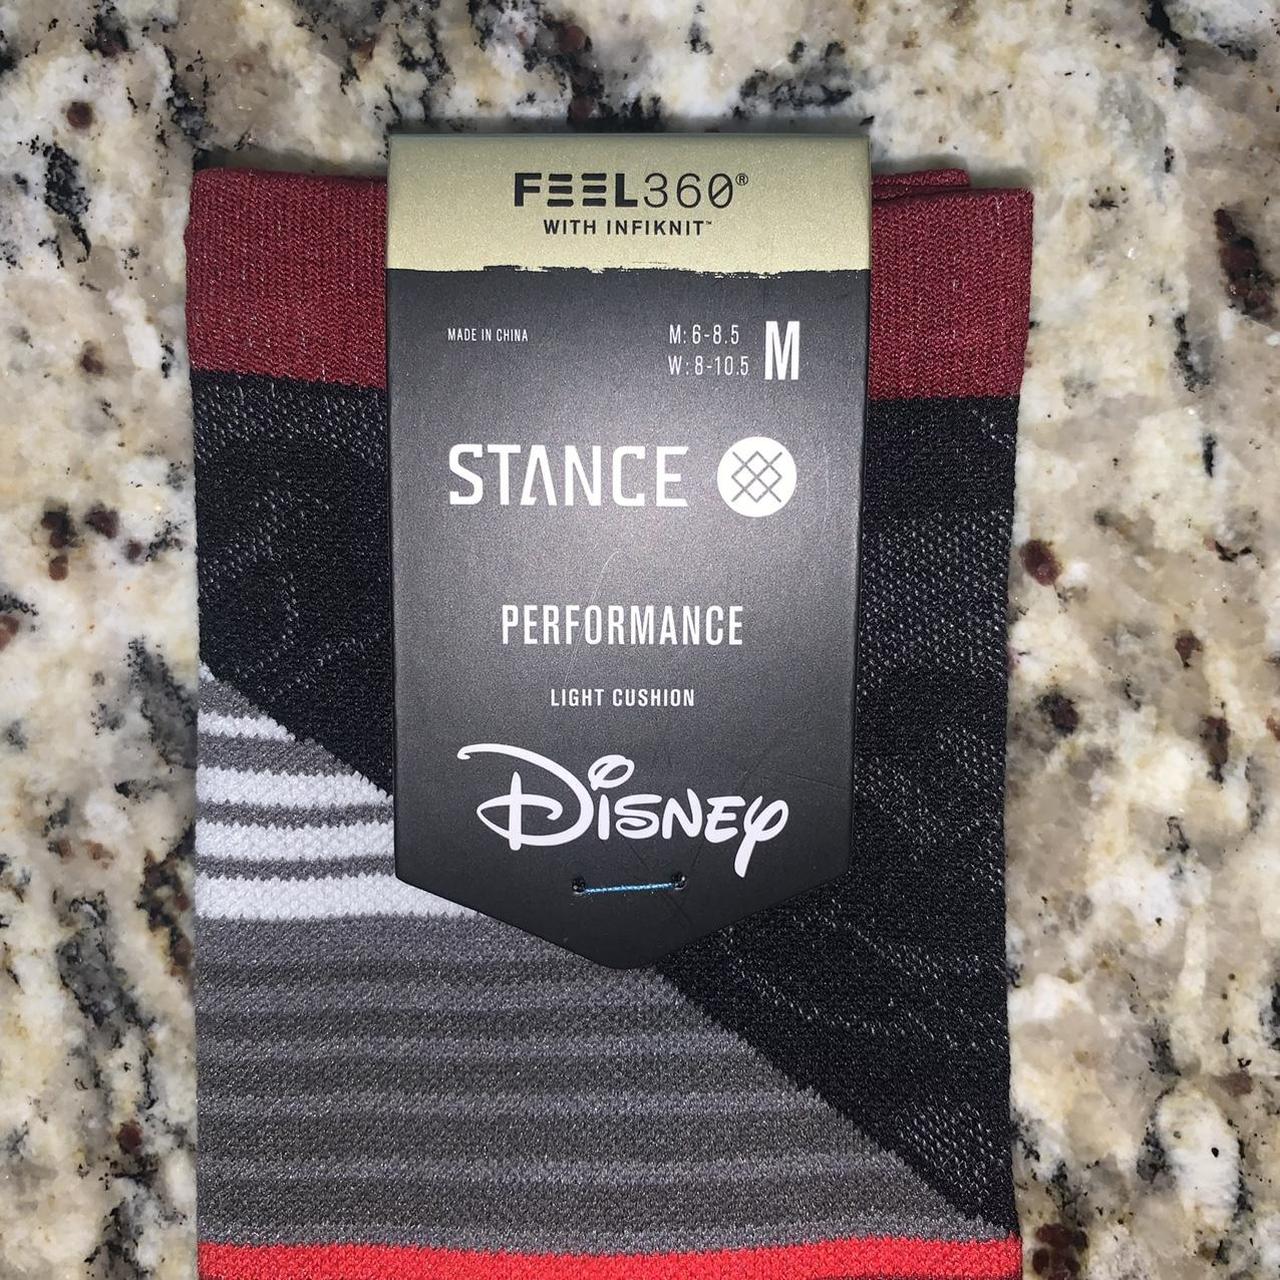 Stance Men's Black and Red Socks (2)